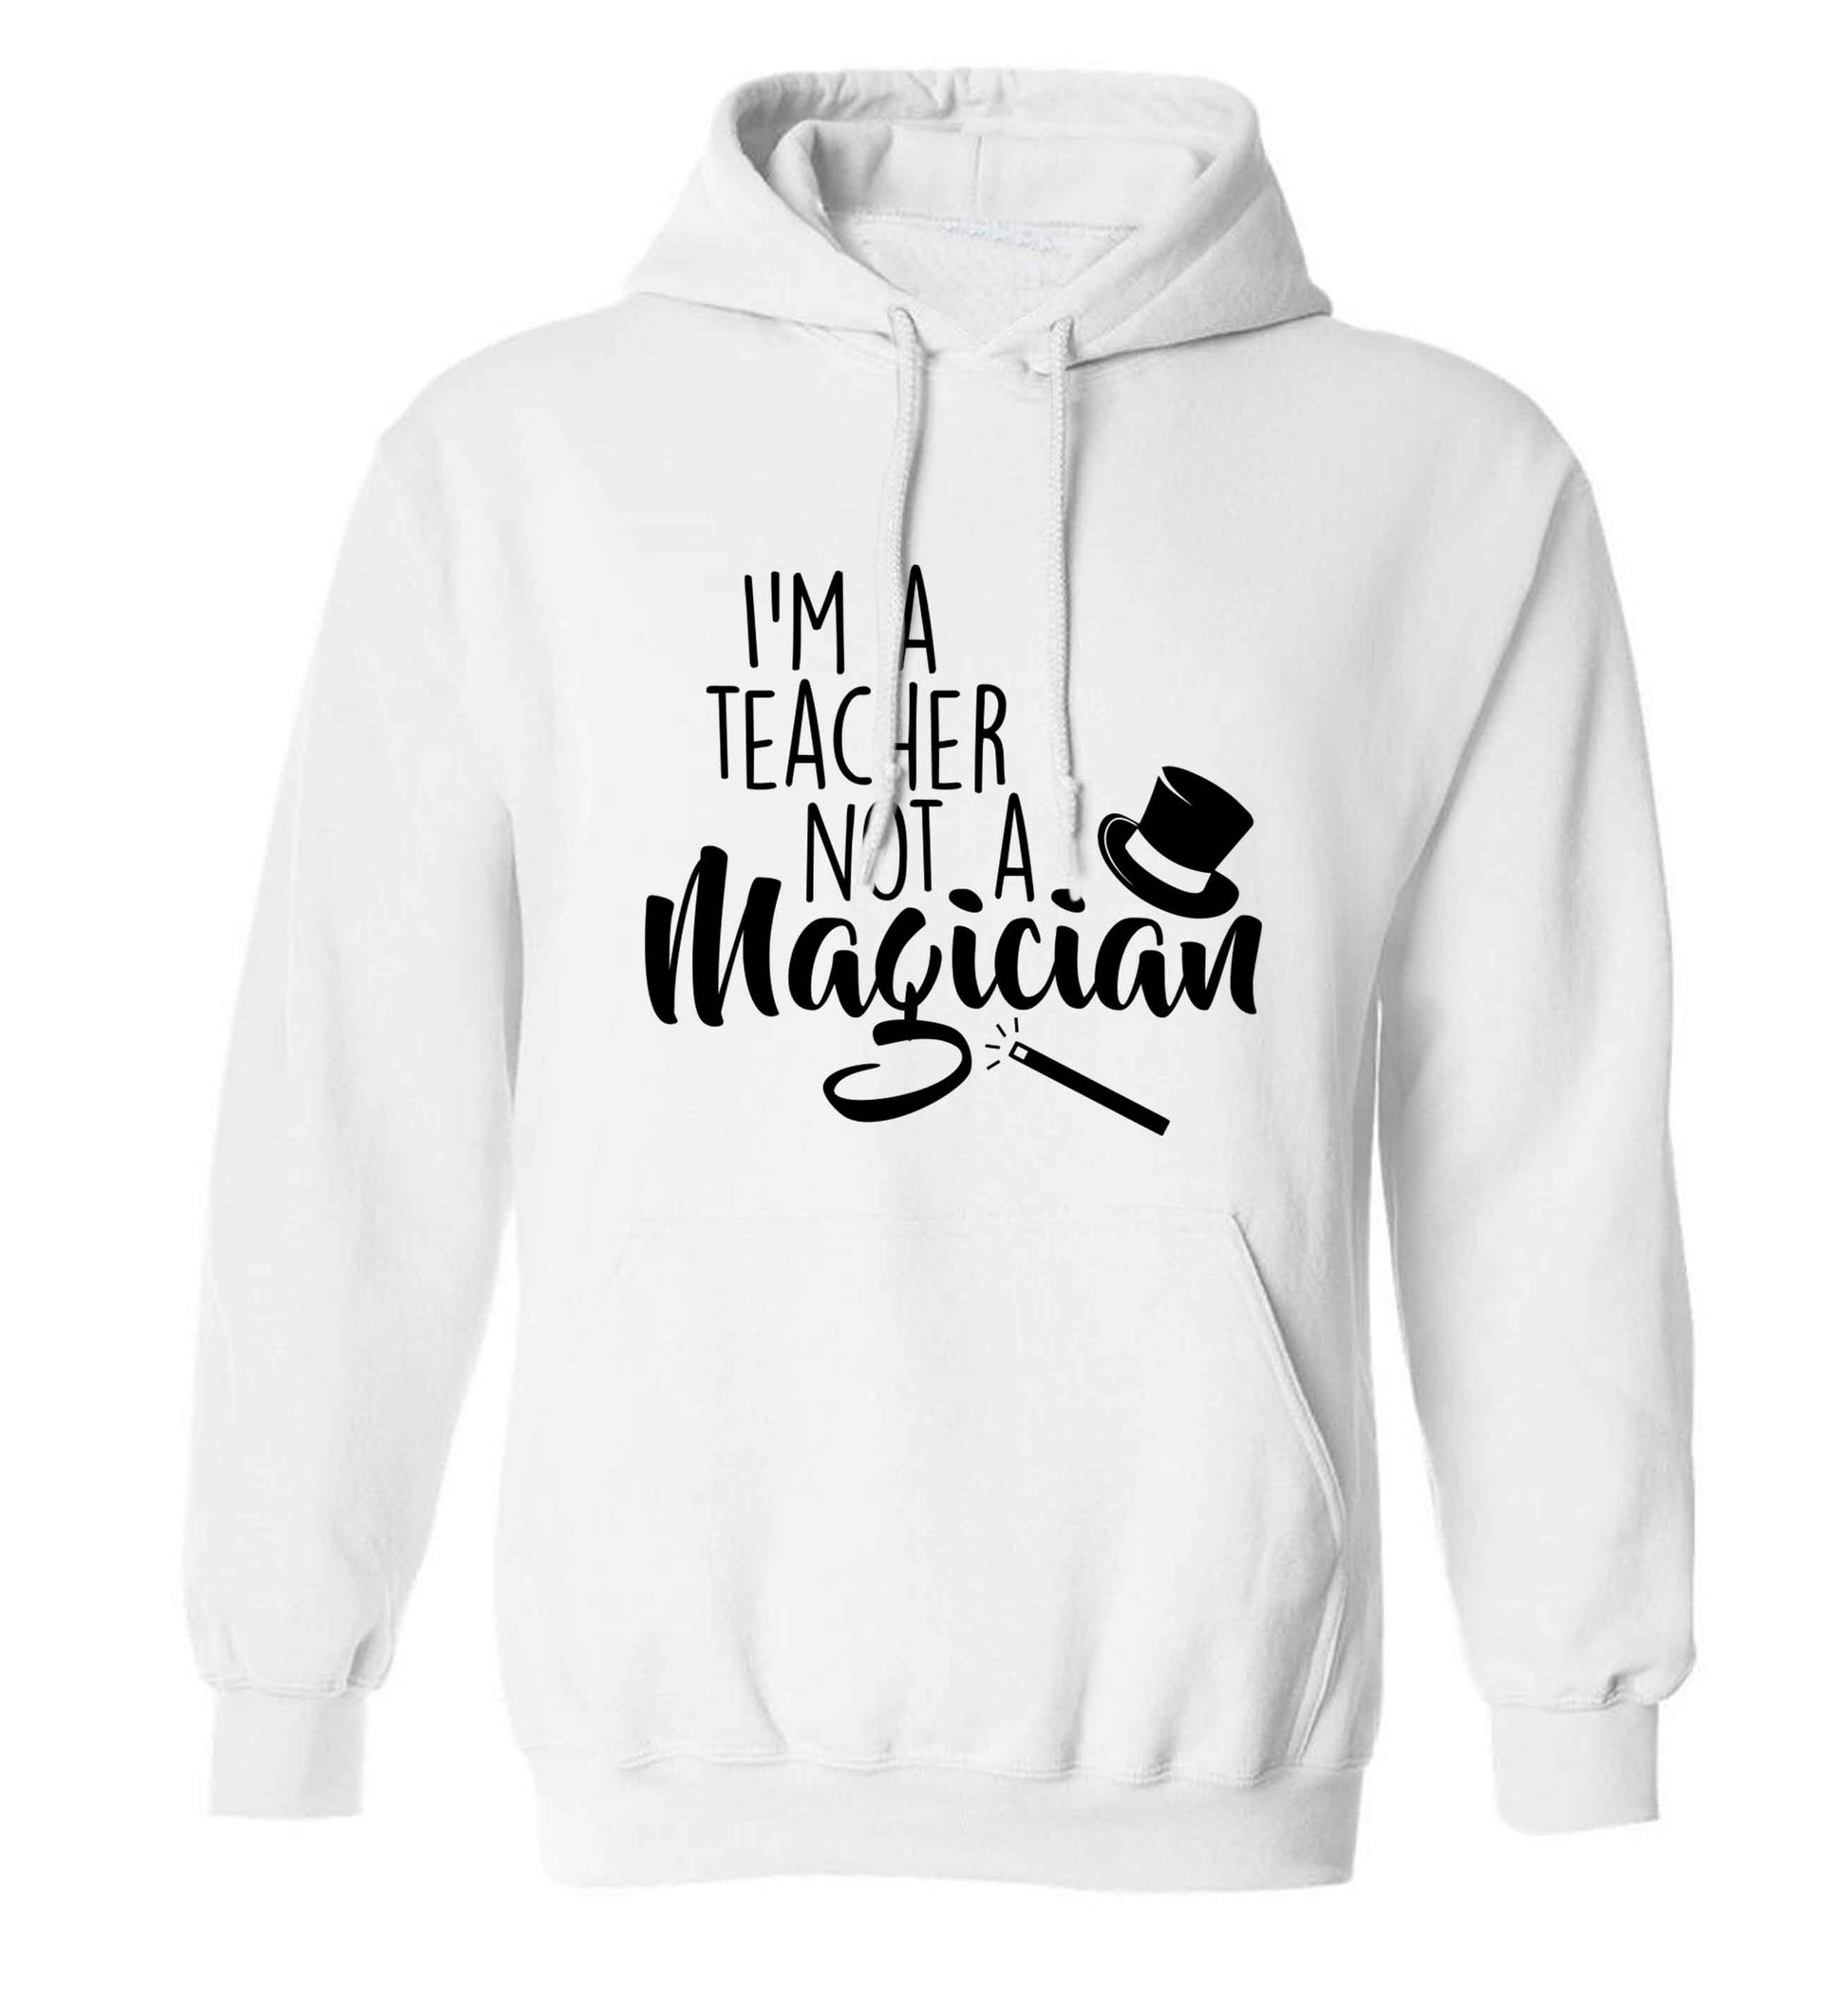 I'm a teacher not a magician adults unisex white hoodie 2XL